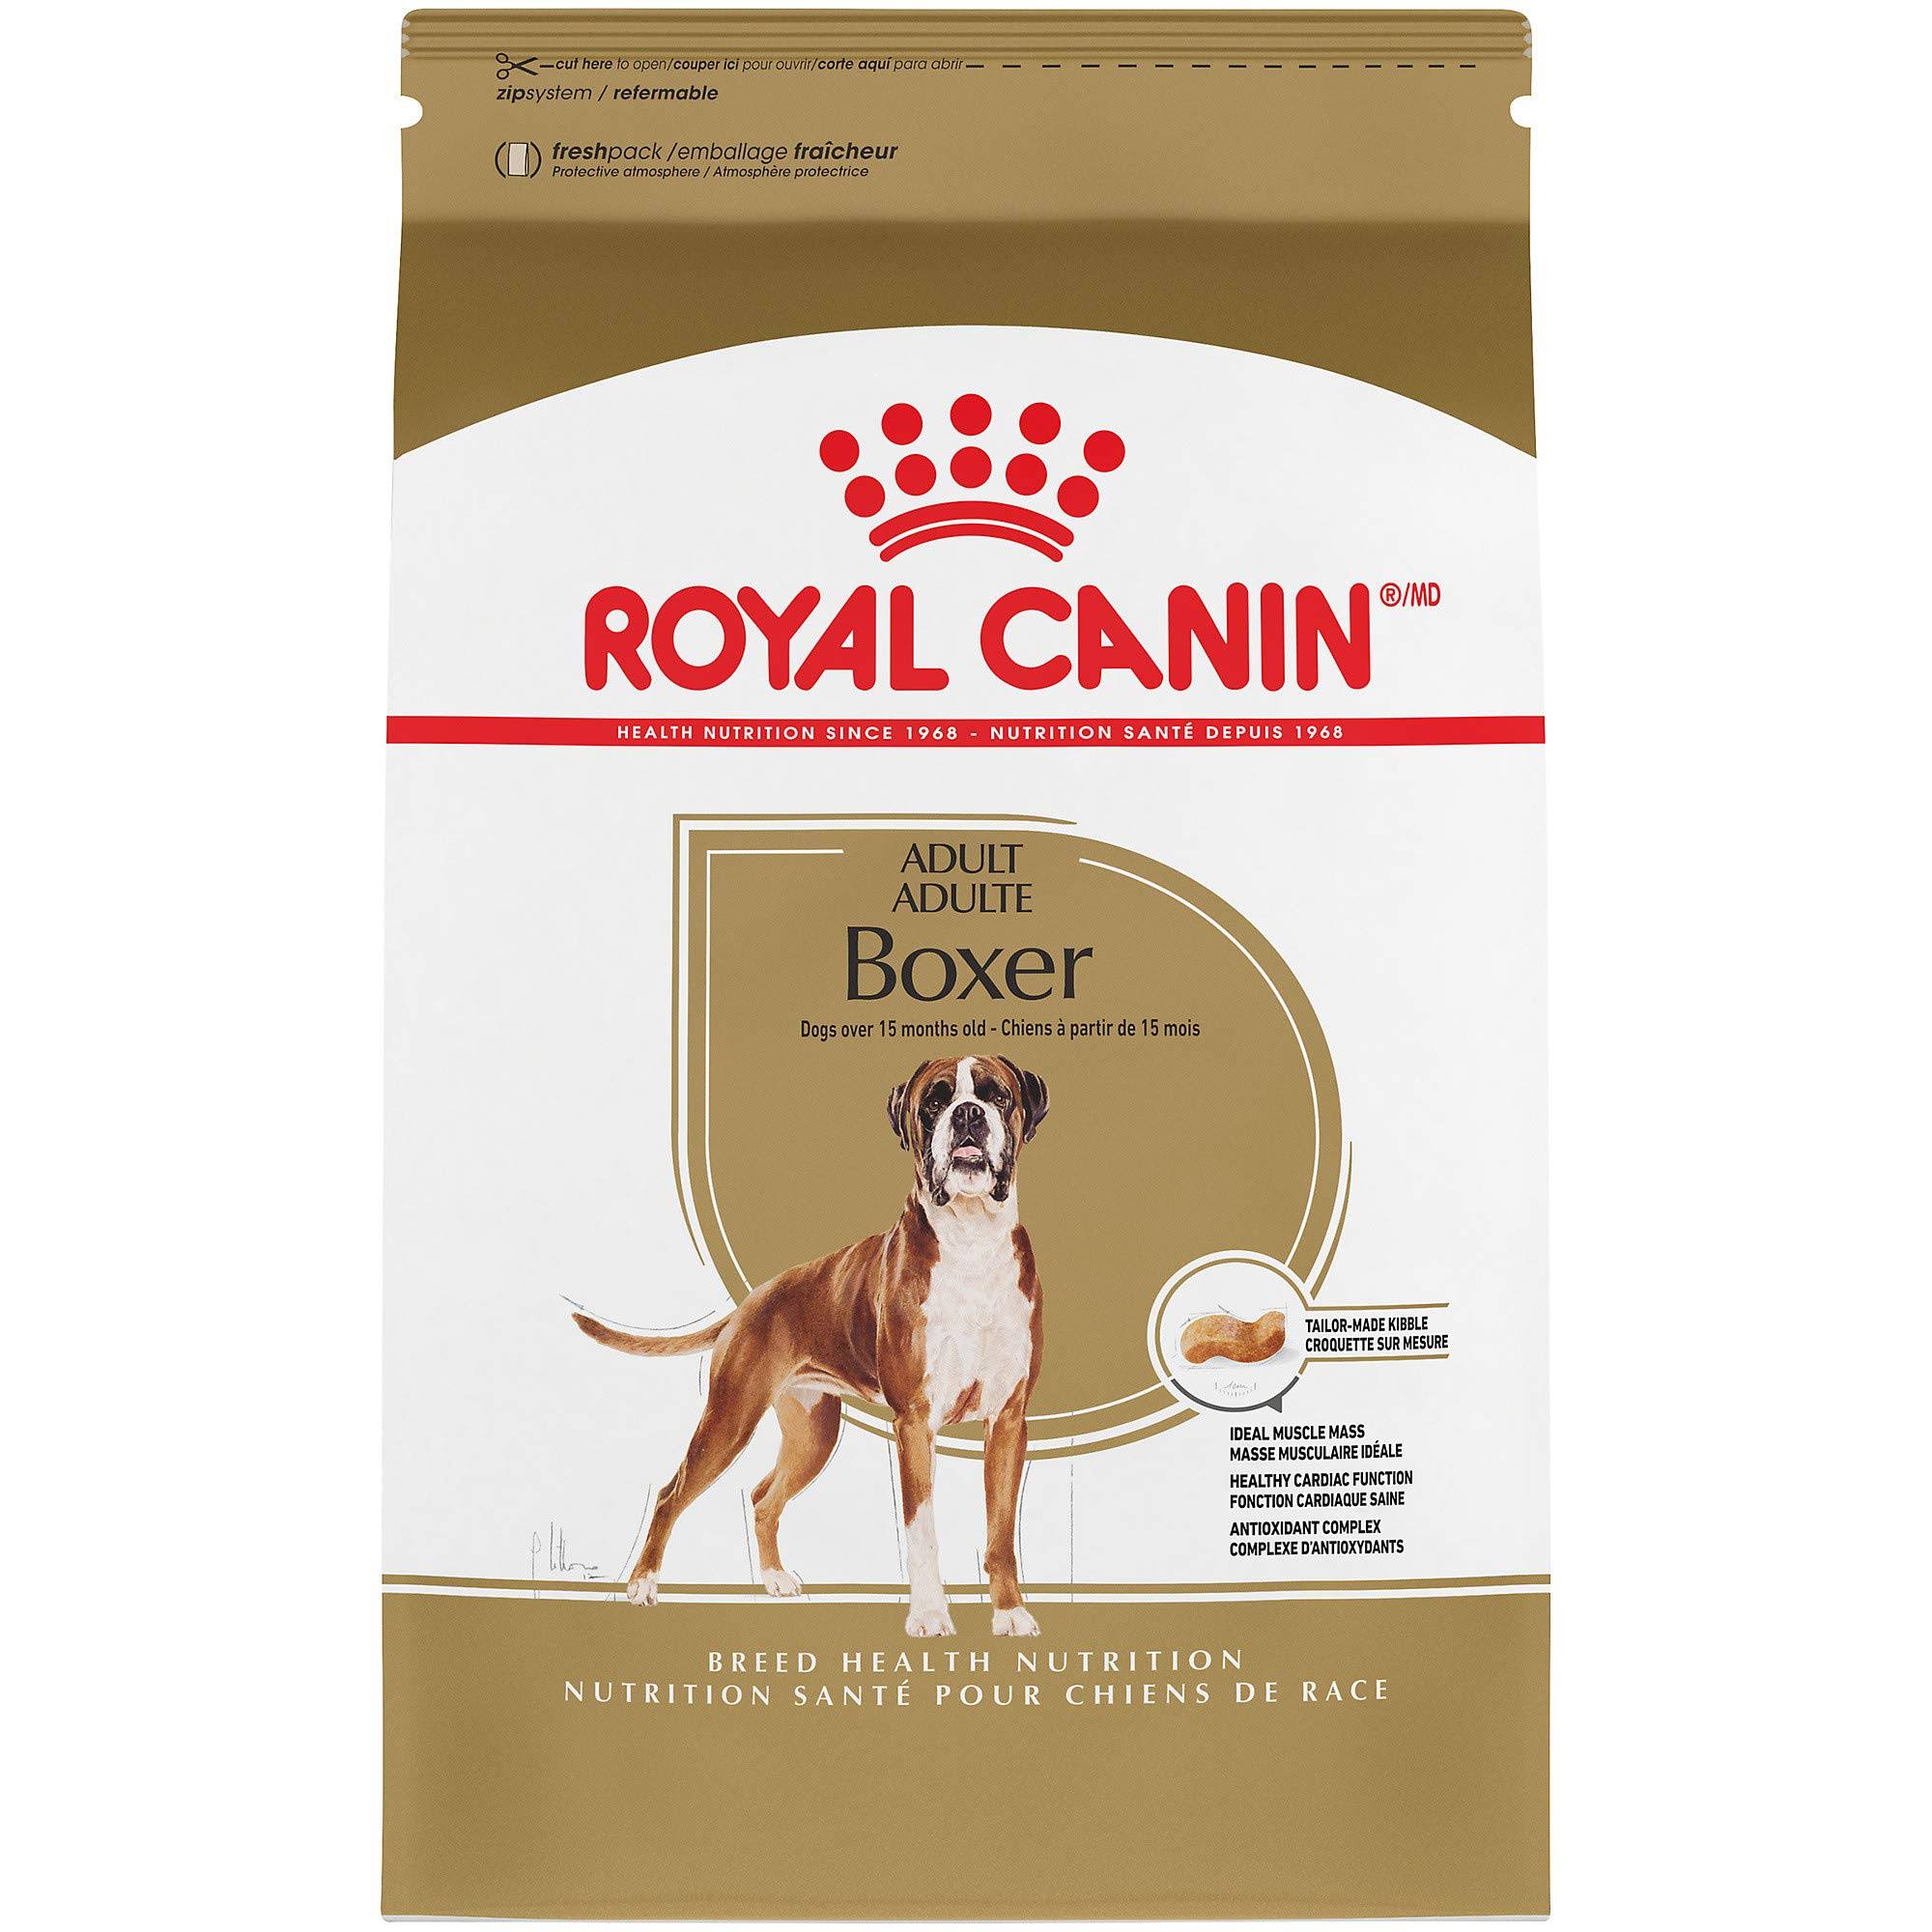 Royal Canin Boxer Adult Dog Food - 30 lb